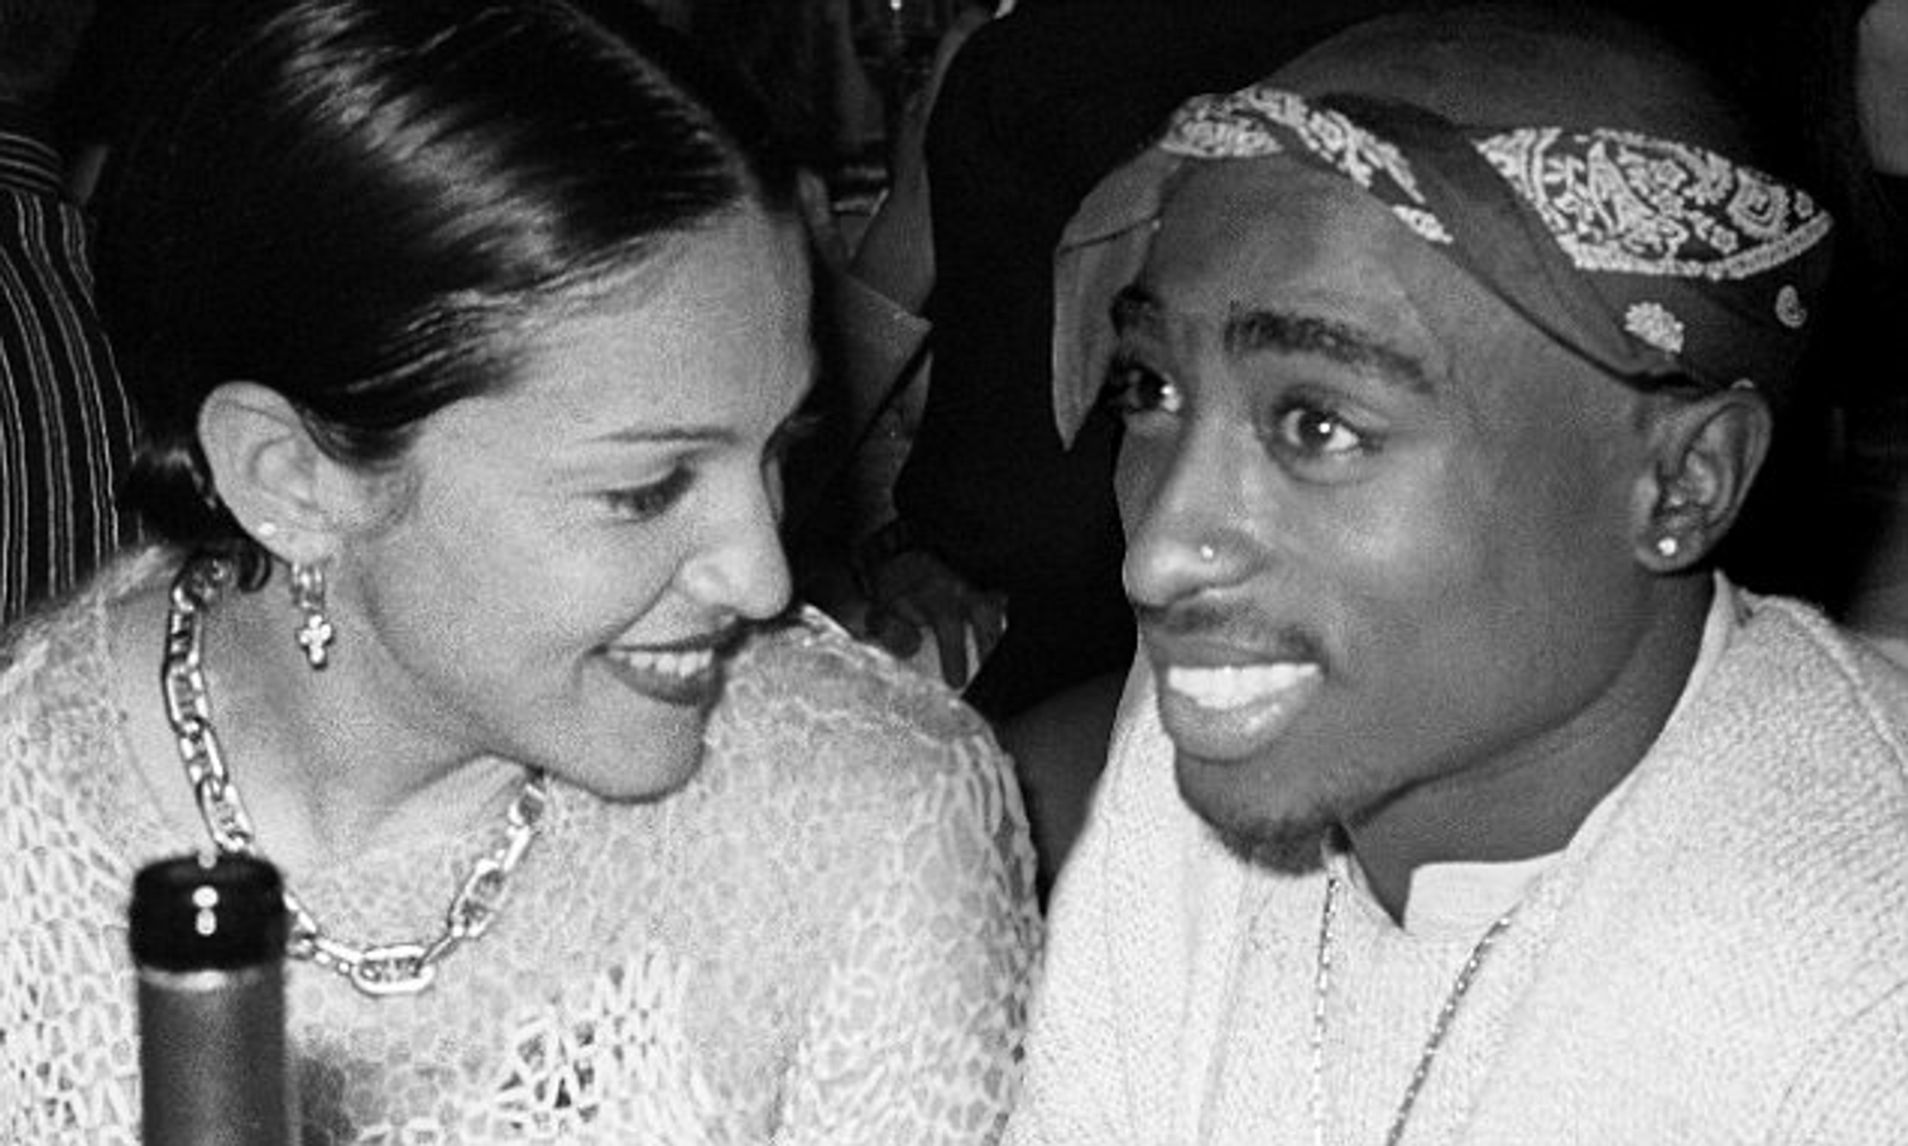 A rare image of Madonna and Tupac Shakur together